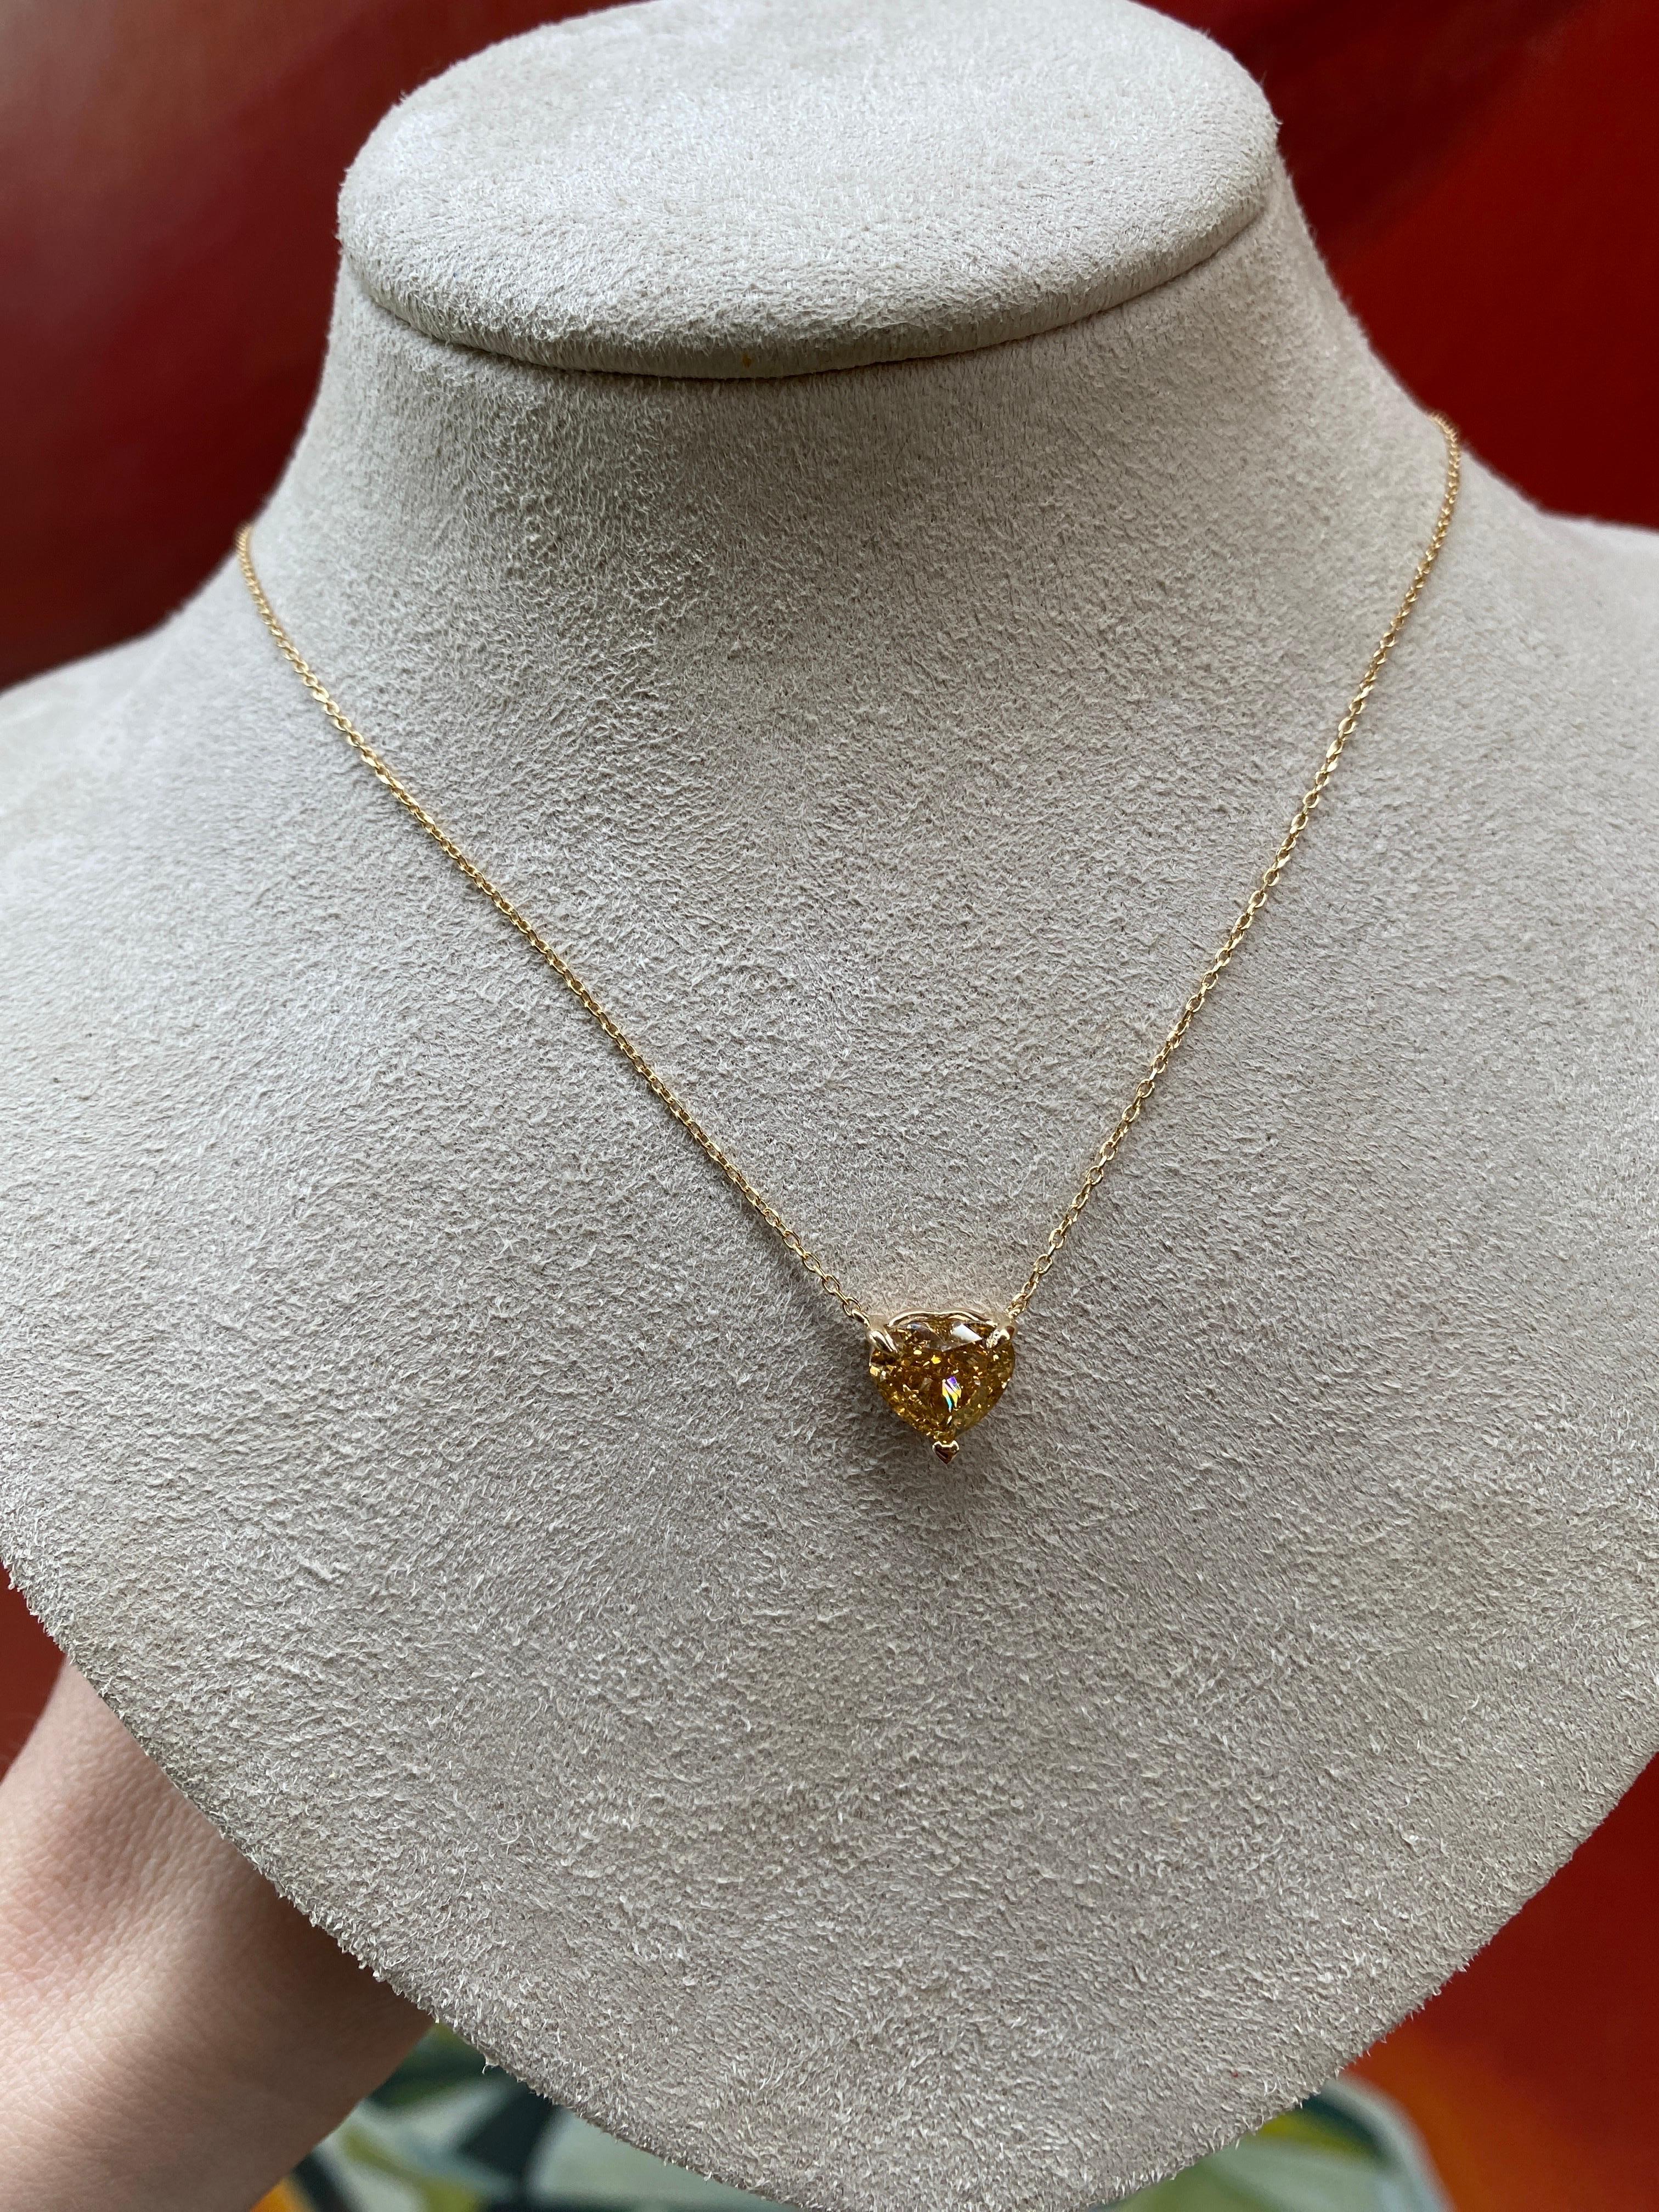 GIA Certified 2.01 Carat Fancy Heart Shaped Diamond Pendant Necklace For Sale 1